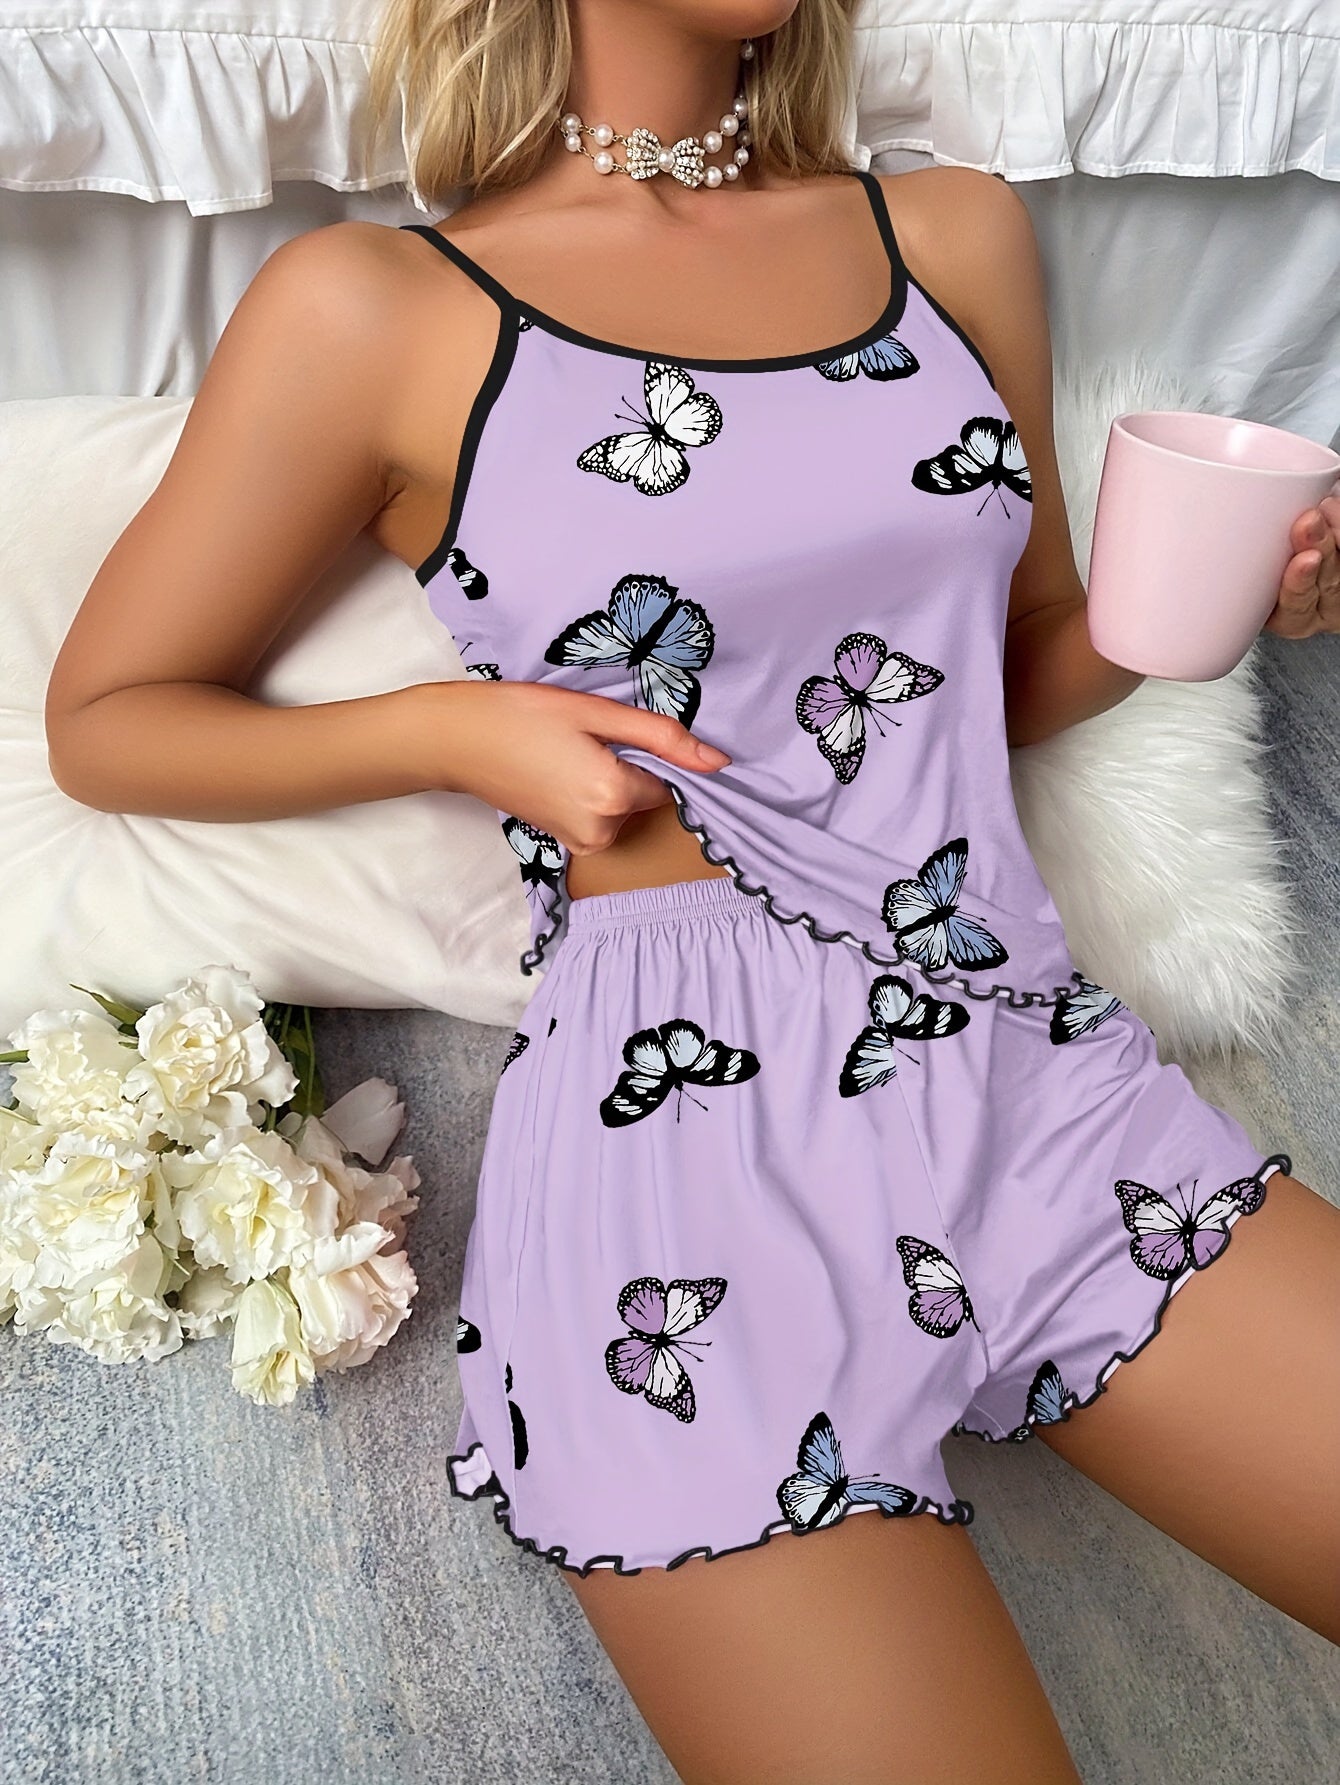 Butterfly Print Pajama Set - Lettuce Trim Cami Top & Elastic Waistband Shorts